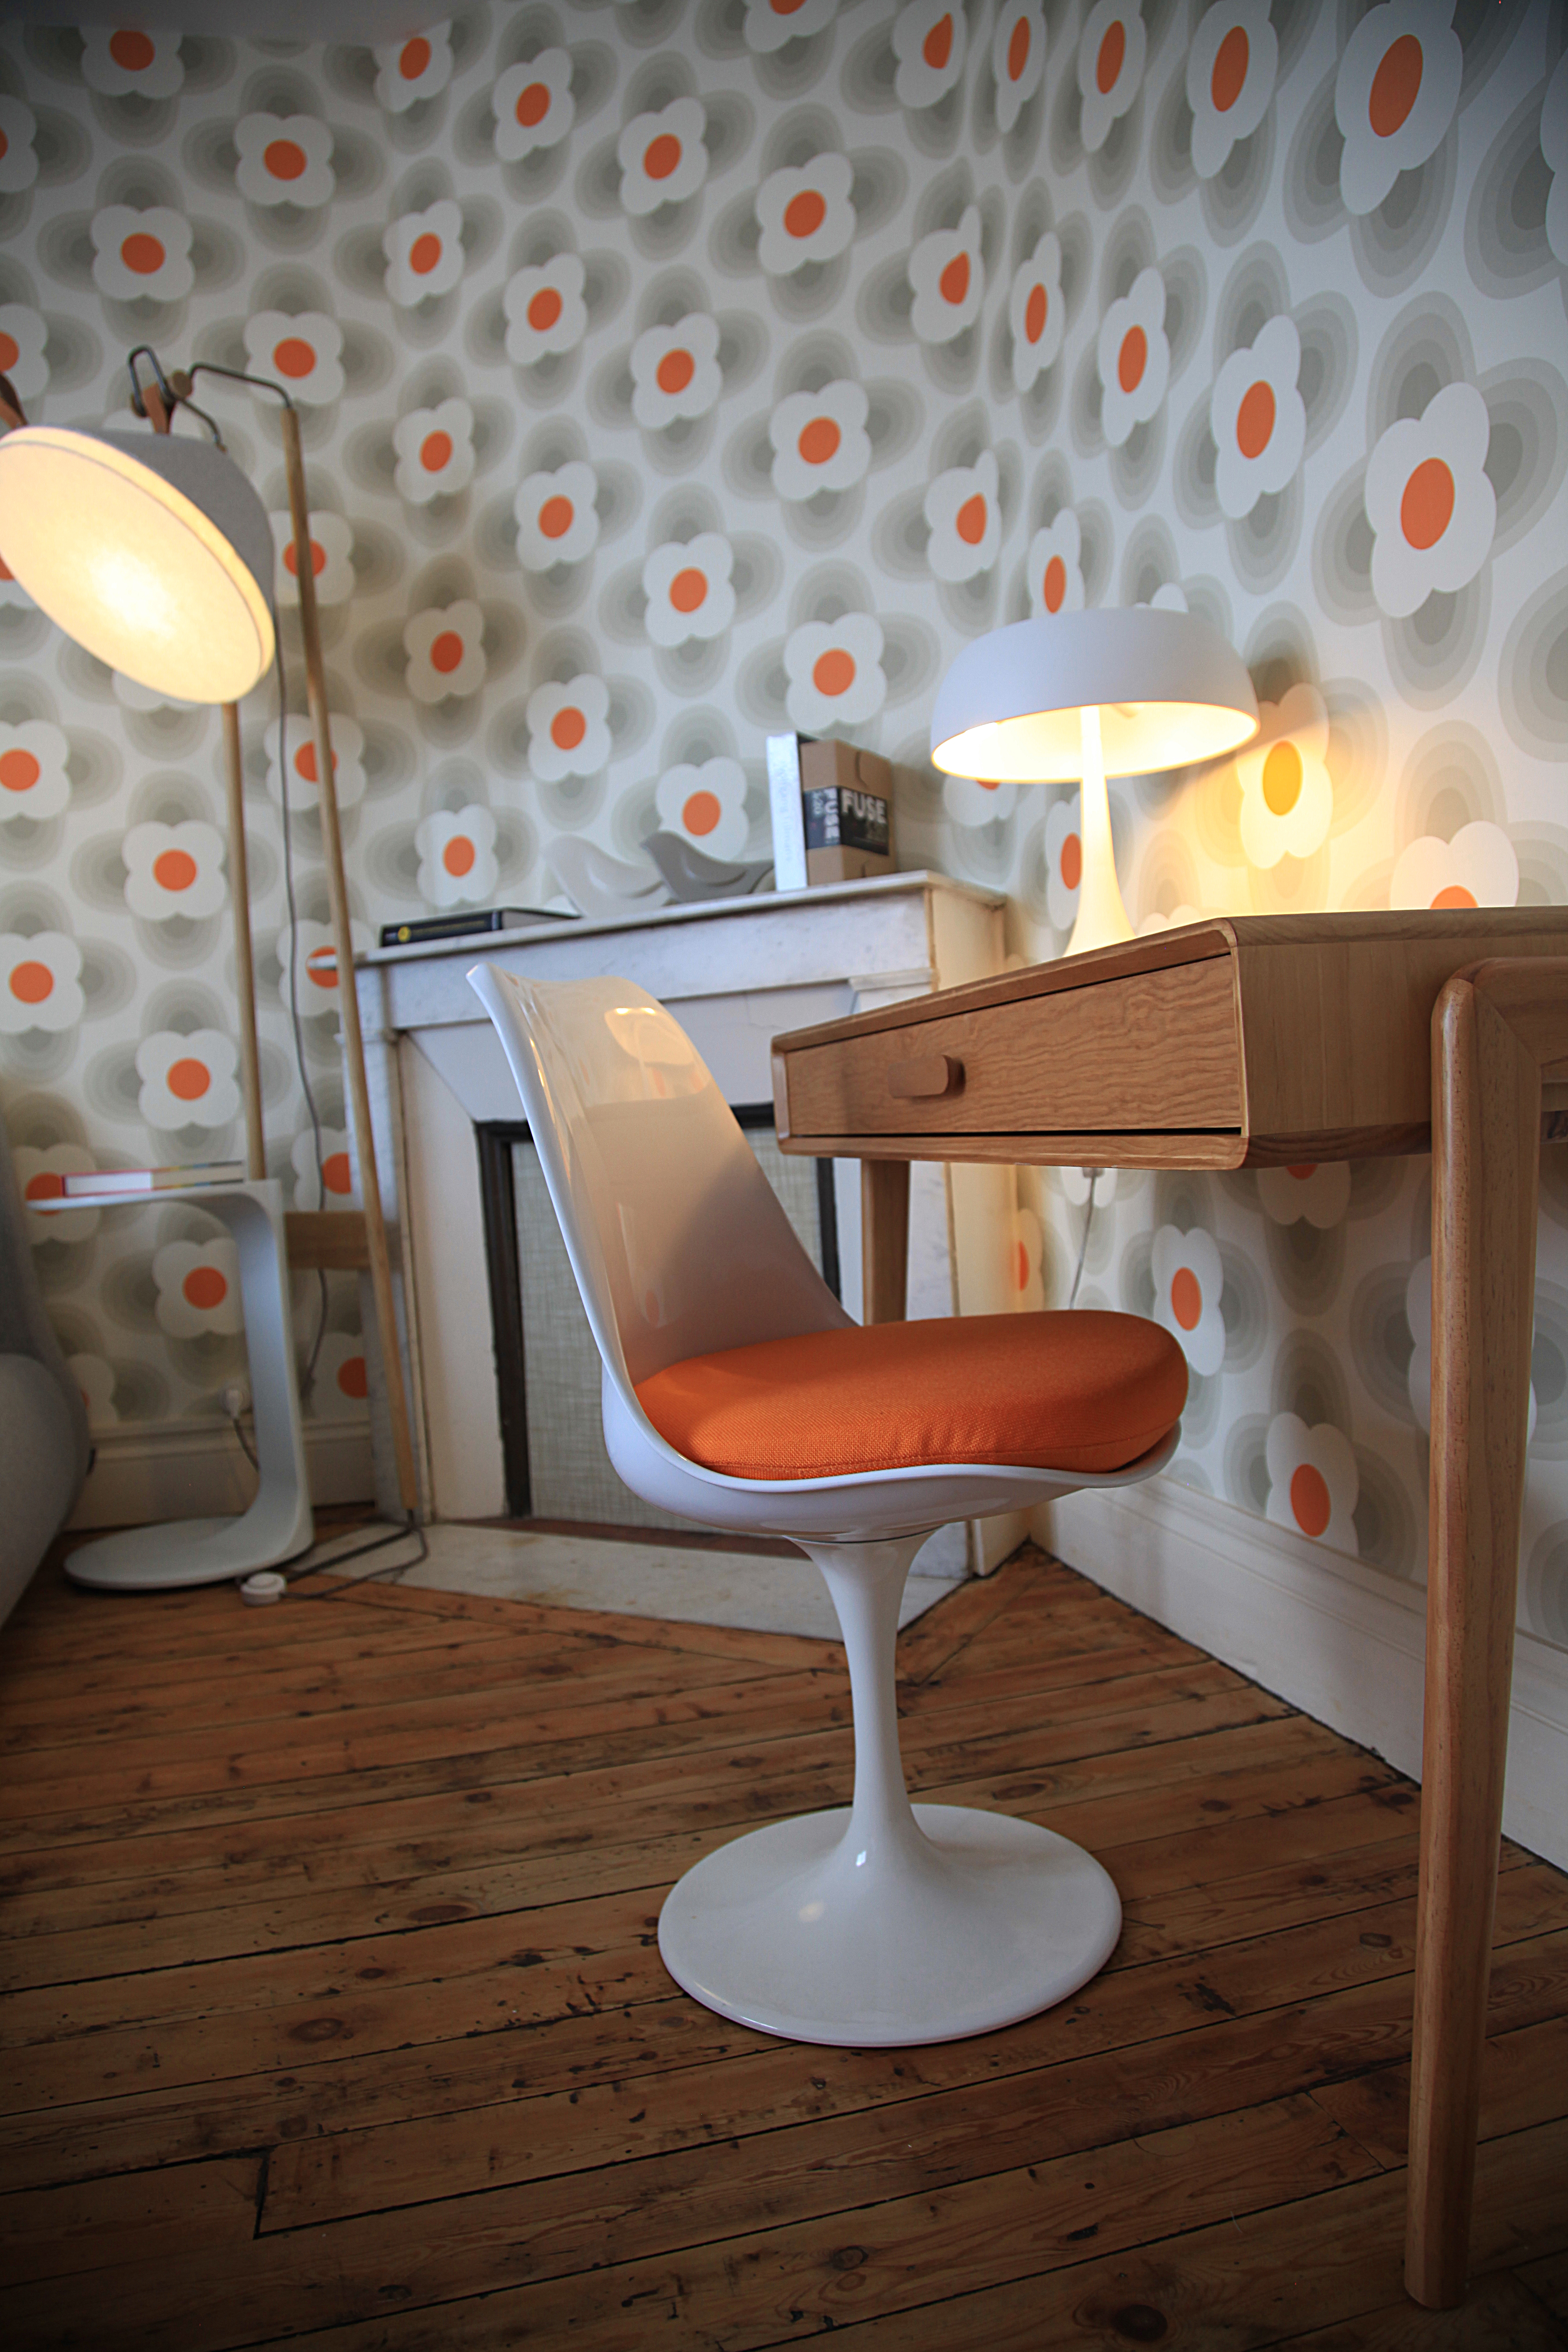 Chez Ric et Fer-vintage b&b-simple desk-Northern France-picardie area-©spherecom